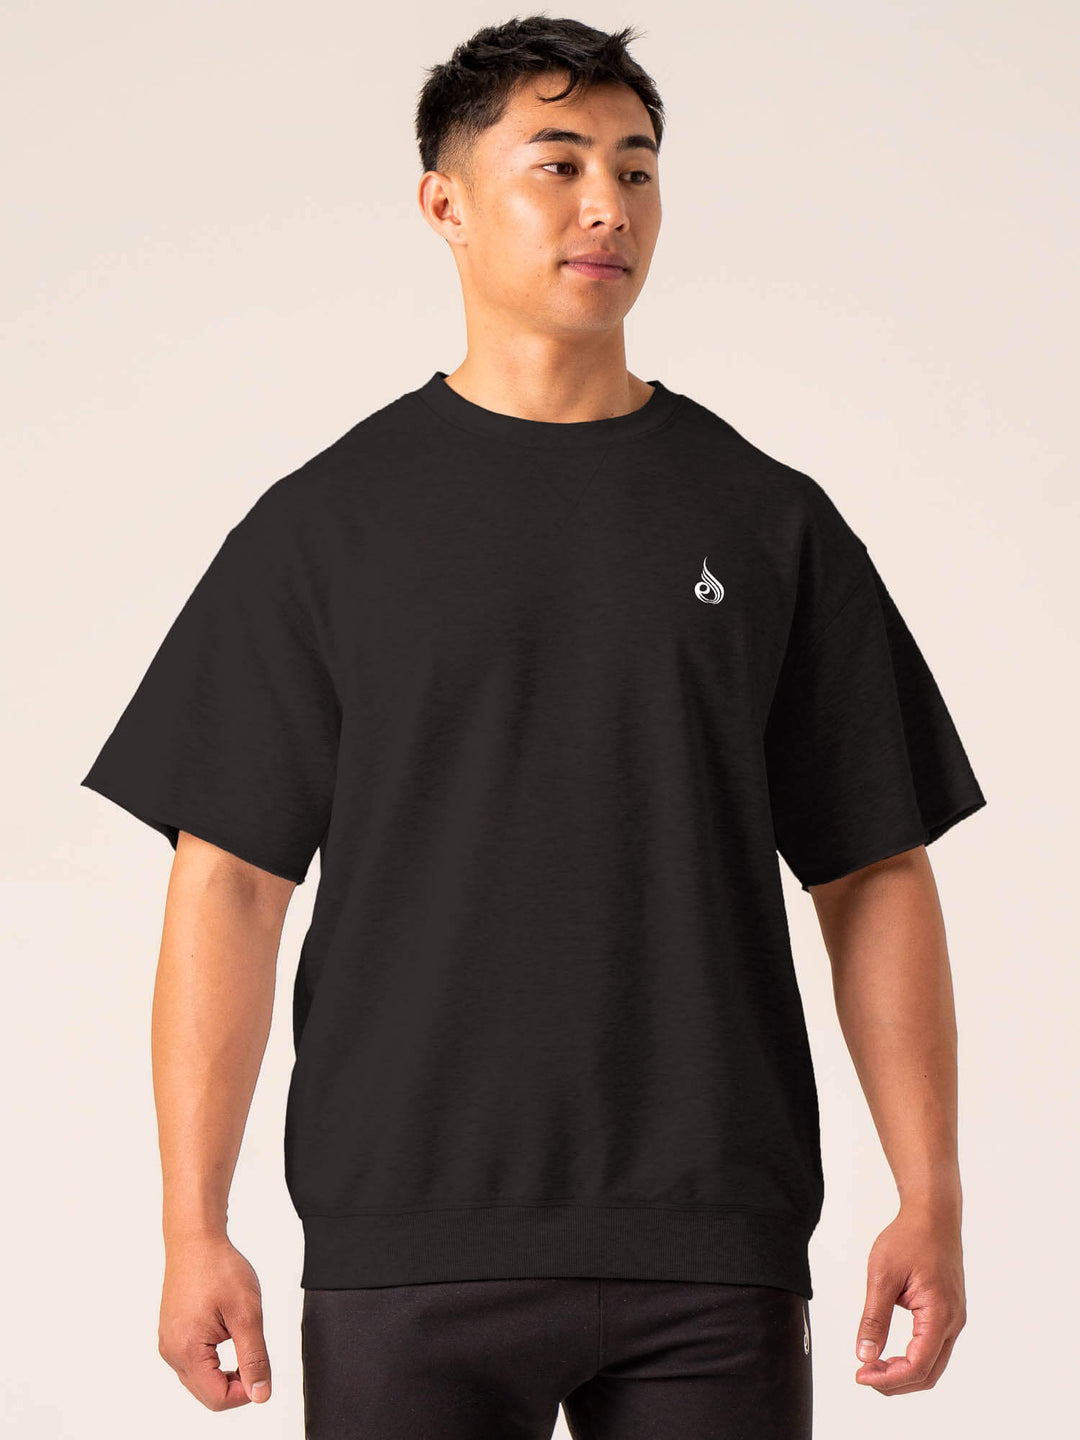 Emerge Fleece T-Shirt - Faded Black Clothing Ryderwear 